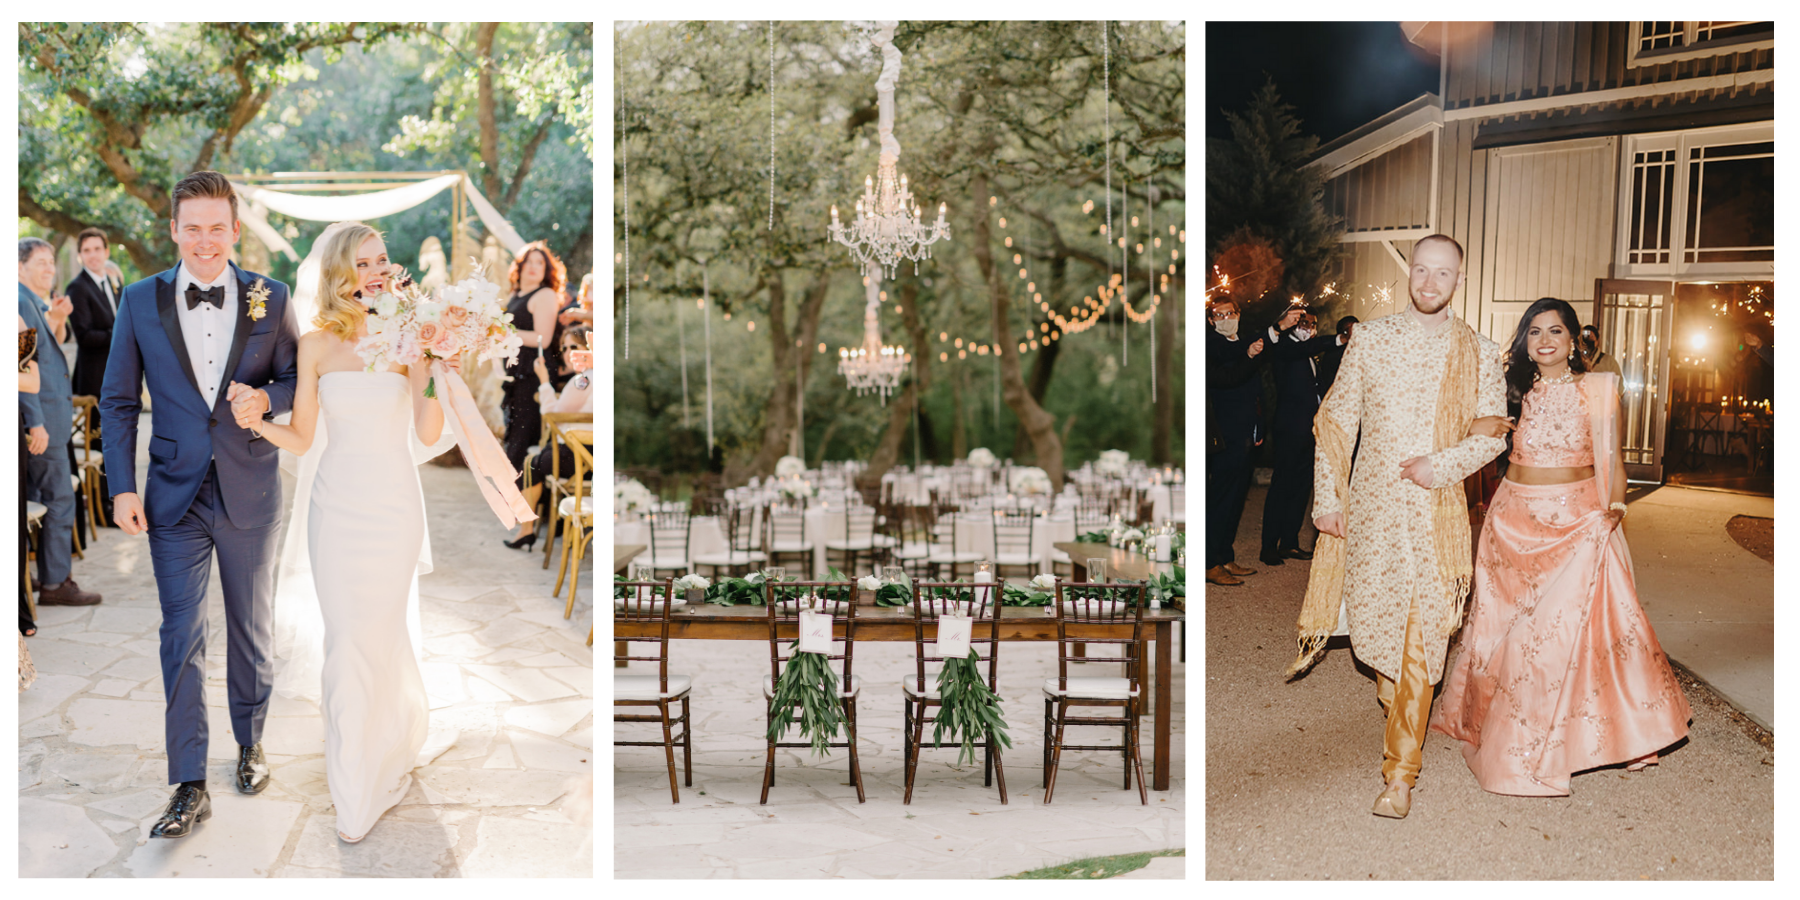 Outdoor Reception and Ceremony in Austin, Texas Cultural Wedding Venue 